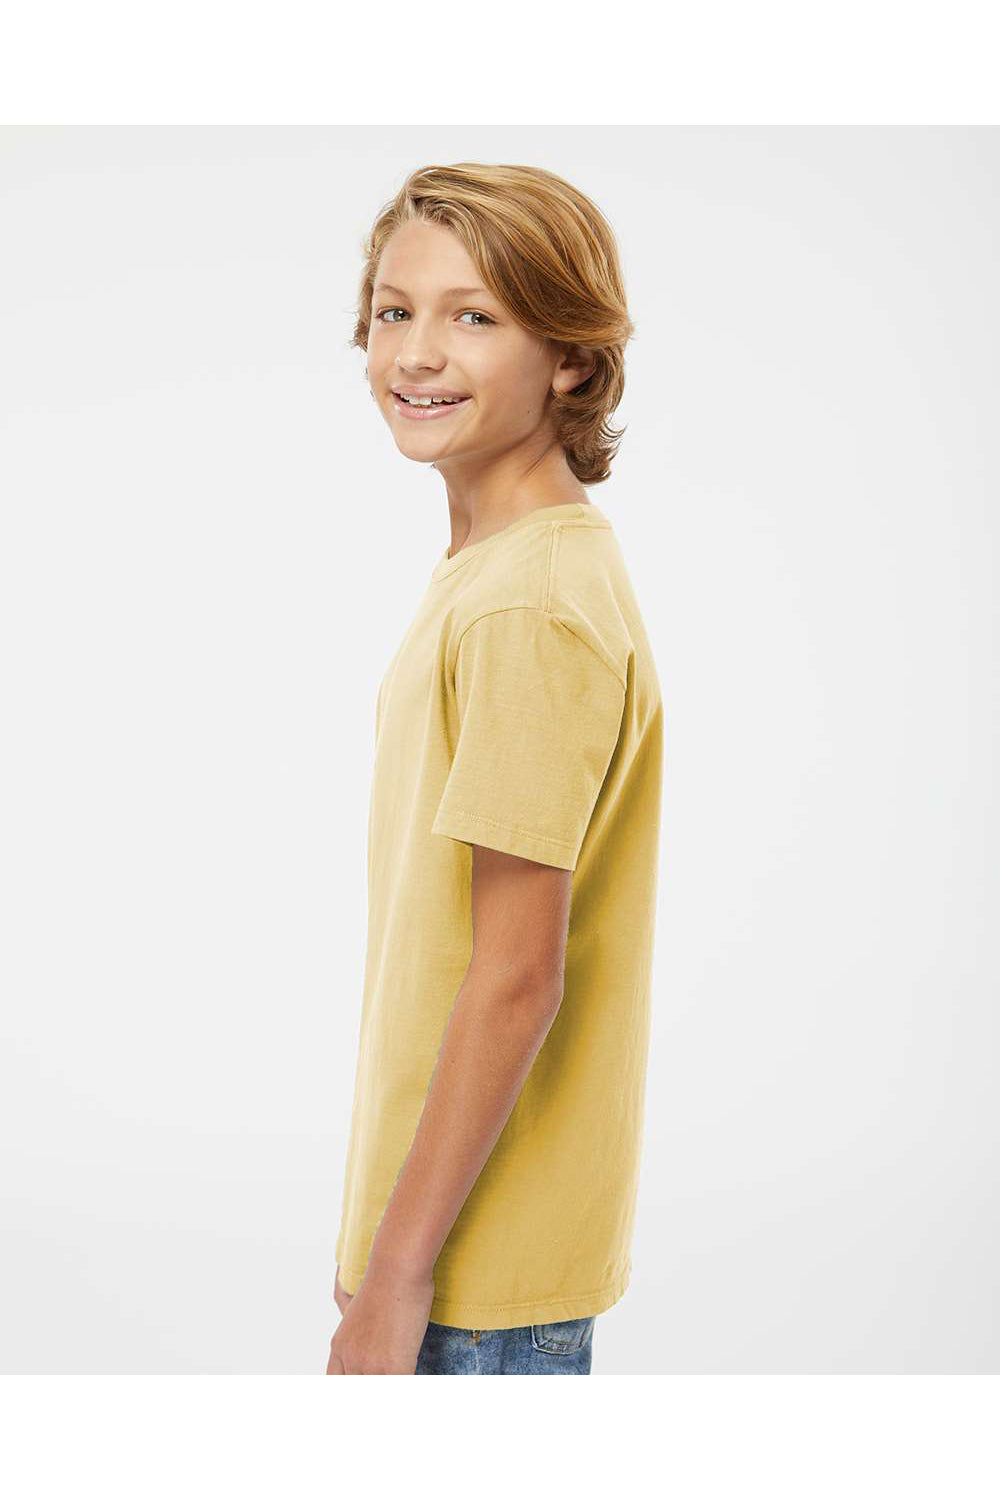 SoftShirts 402 Youth Organic Short Sleeve Crewneck T-Shirt Wheat Yellow Model Side